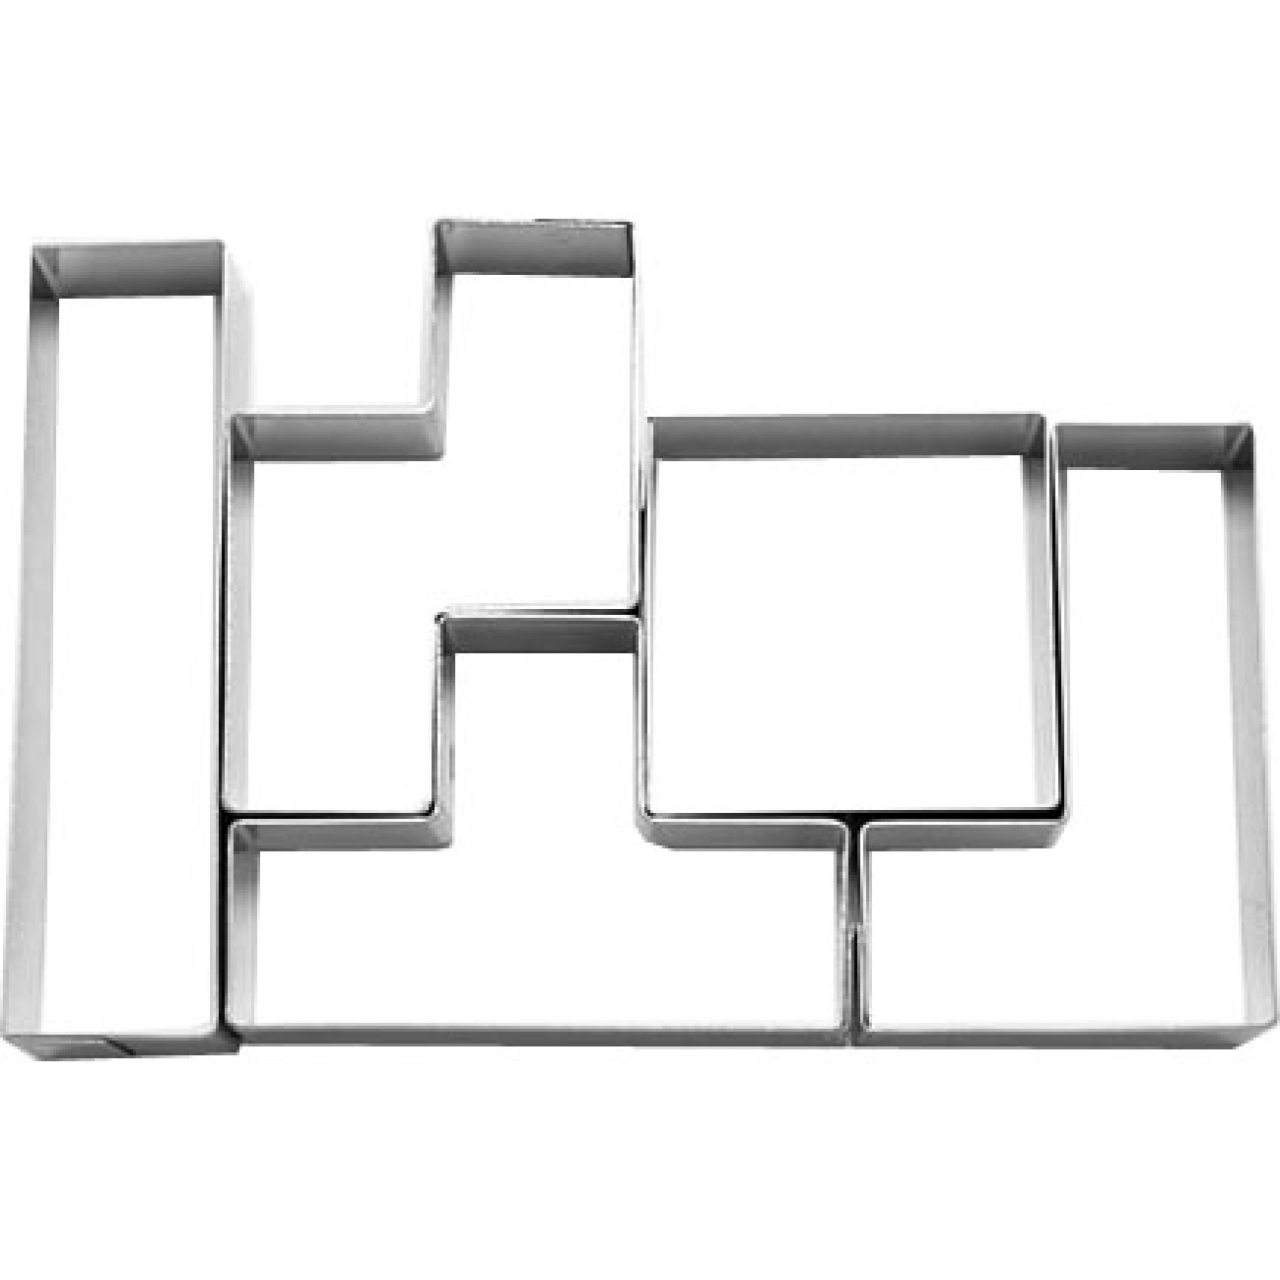 Keksausstechformen 'Tetris', 7 teilig